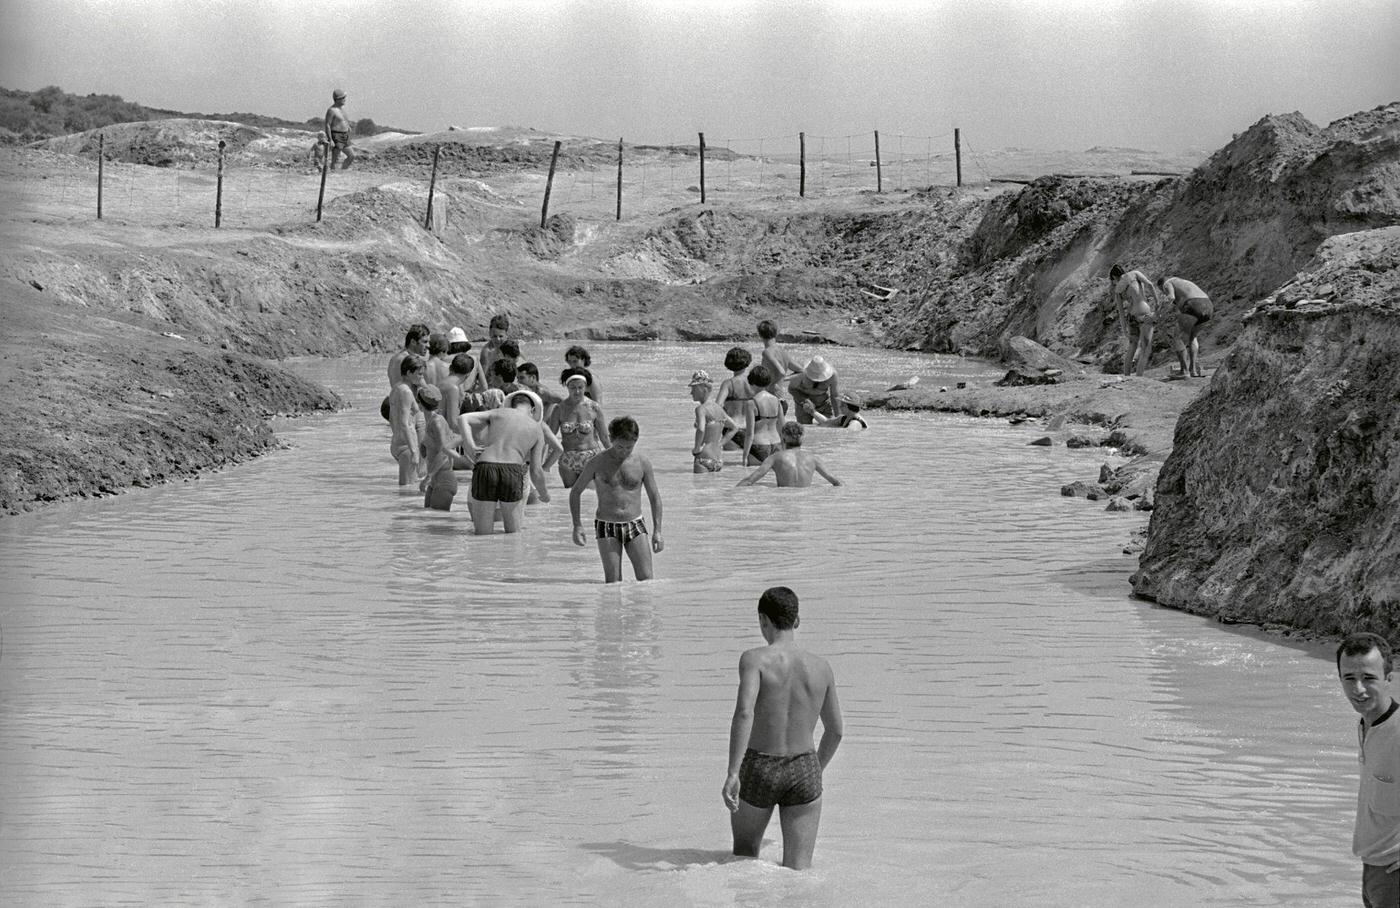 Sulfur mud baths on Vulcano Island, Sicily, June 1970.